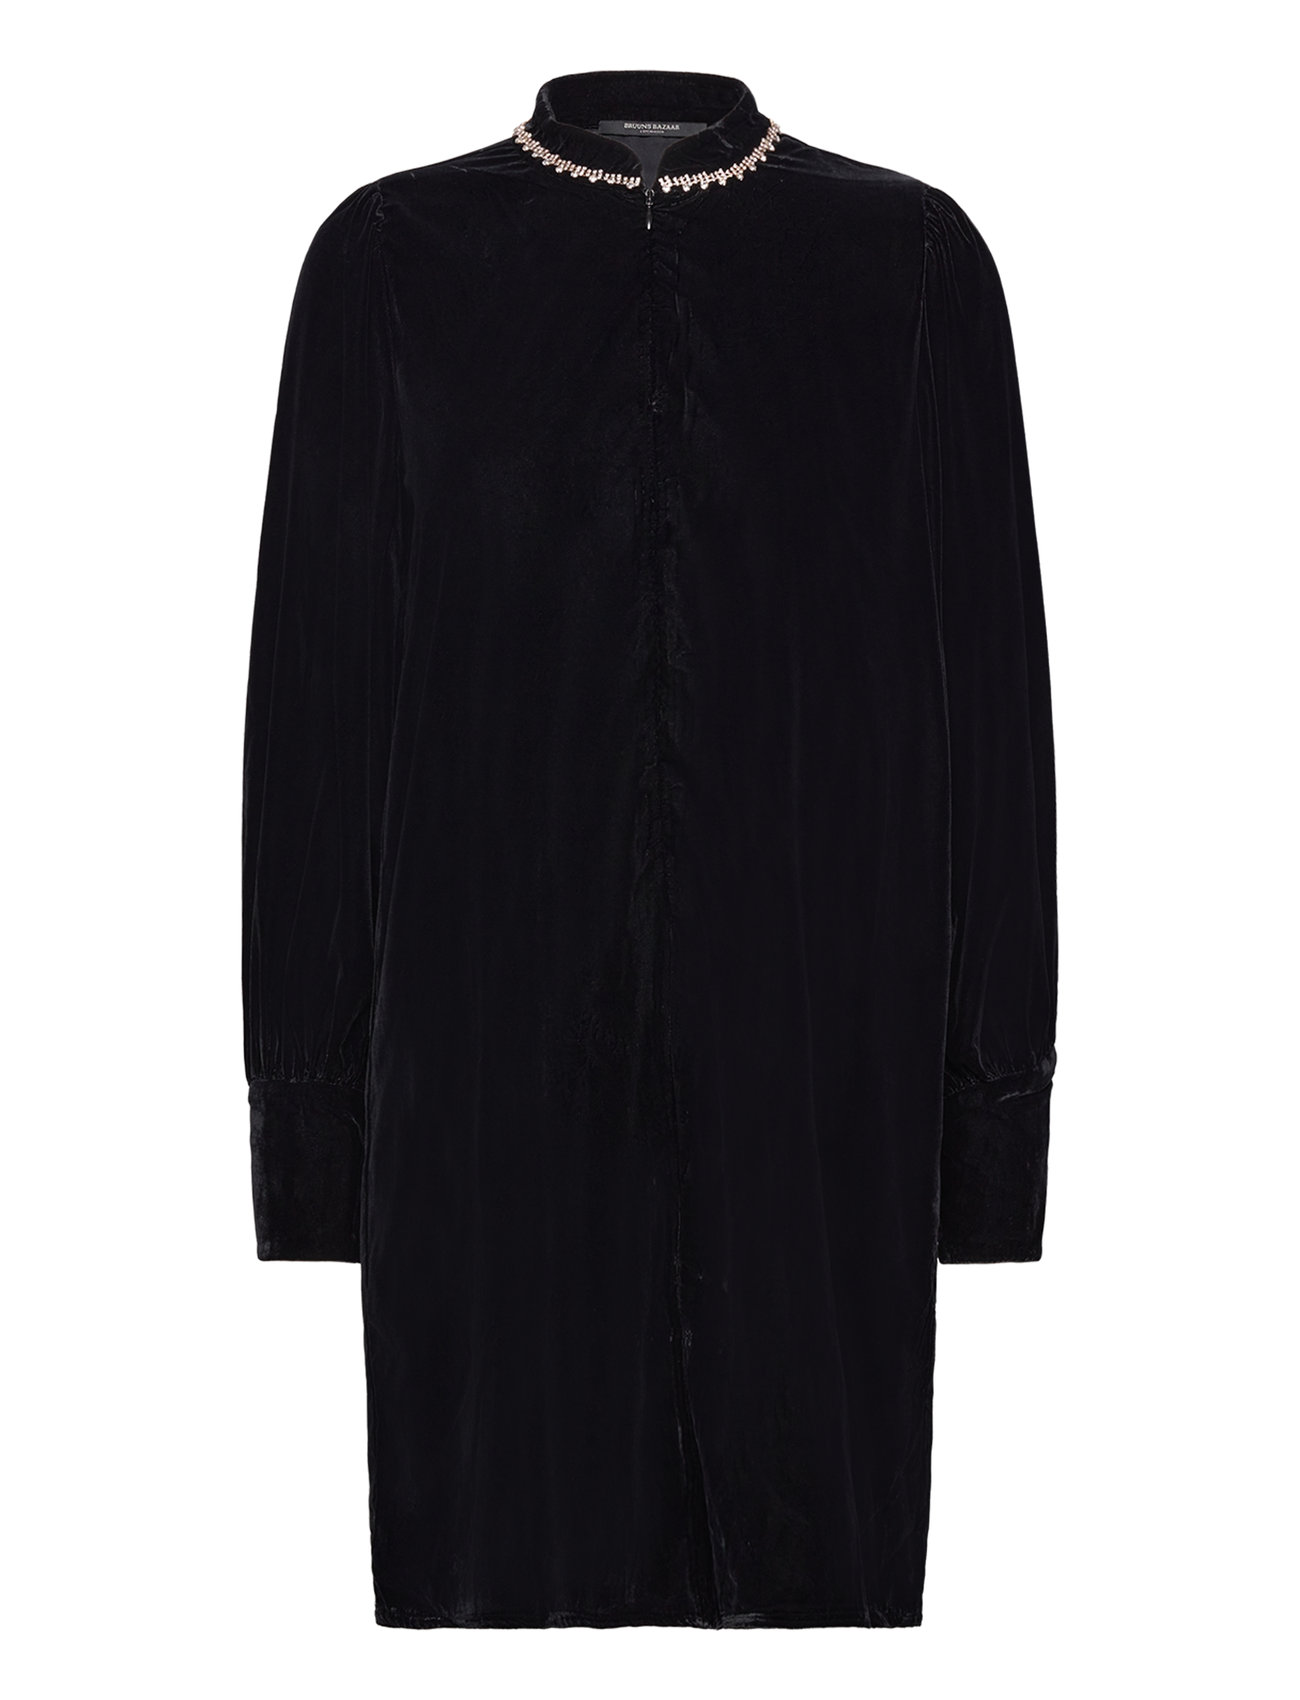 Blackshawbbcecia Dress Kort Kjole Black Bruuns Bazaar